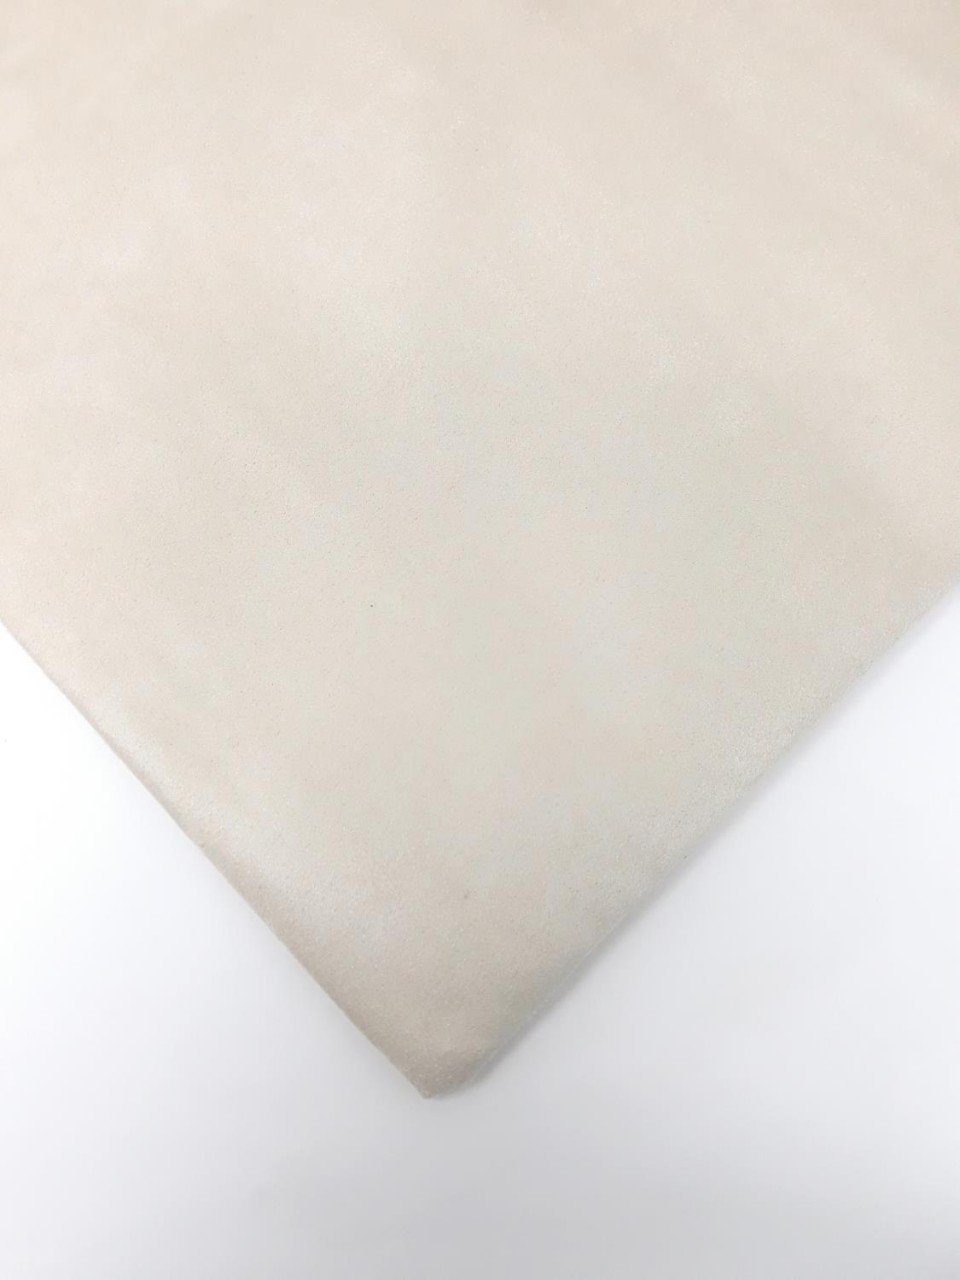 Platzset, HOSSNER - ART DECO, L:48cm B:33cm OF HOME Polyester Weiß